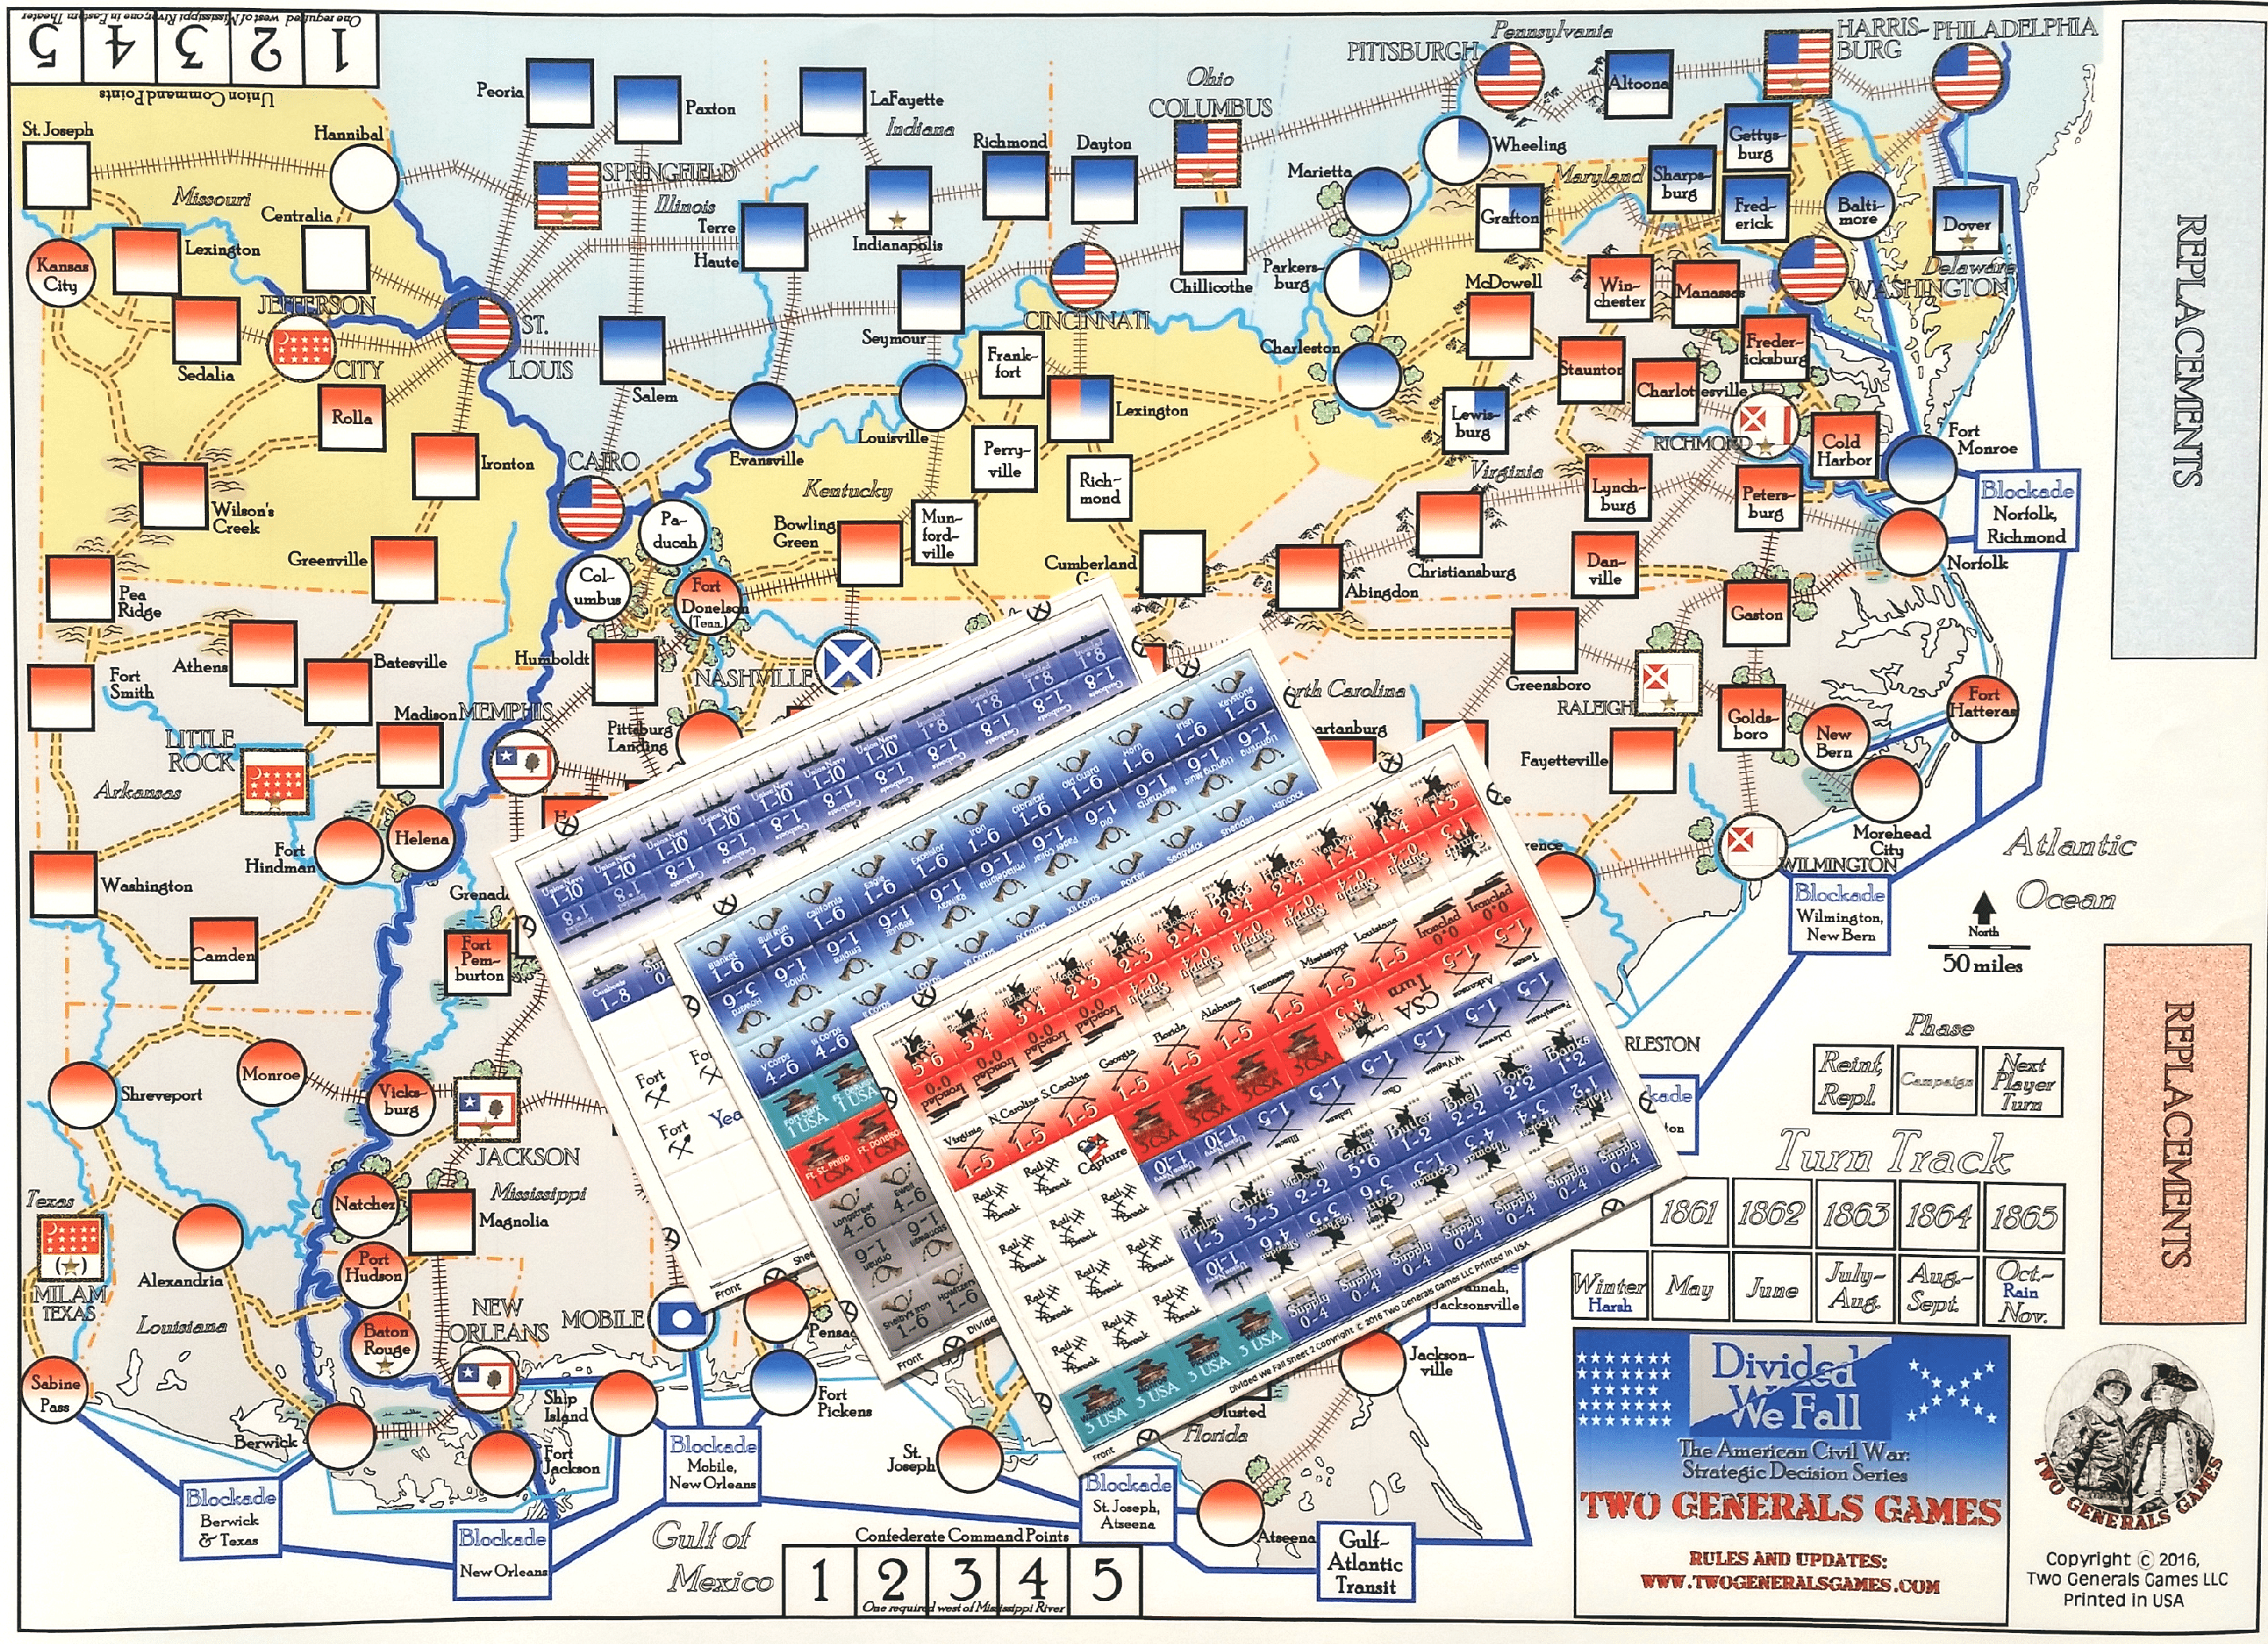 Divided We Fall: The American Civil War